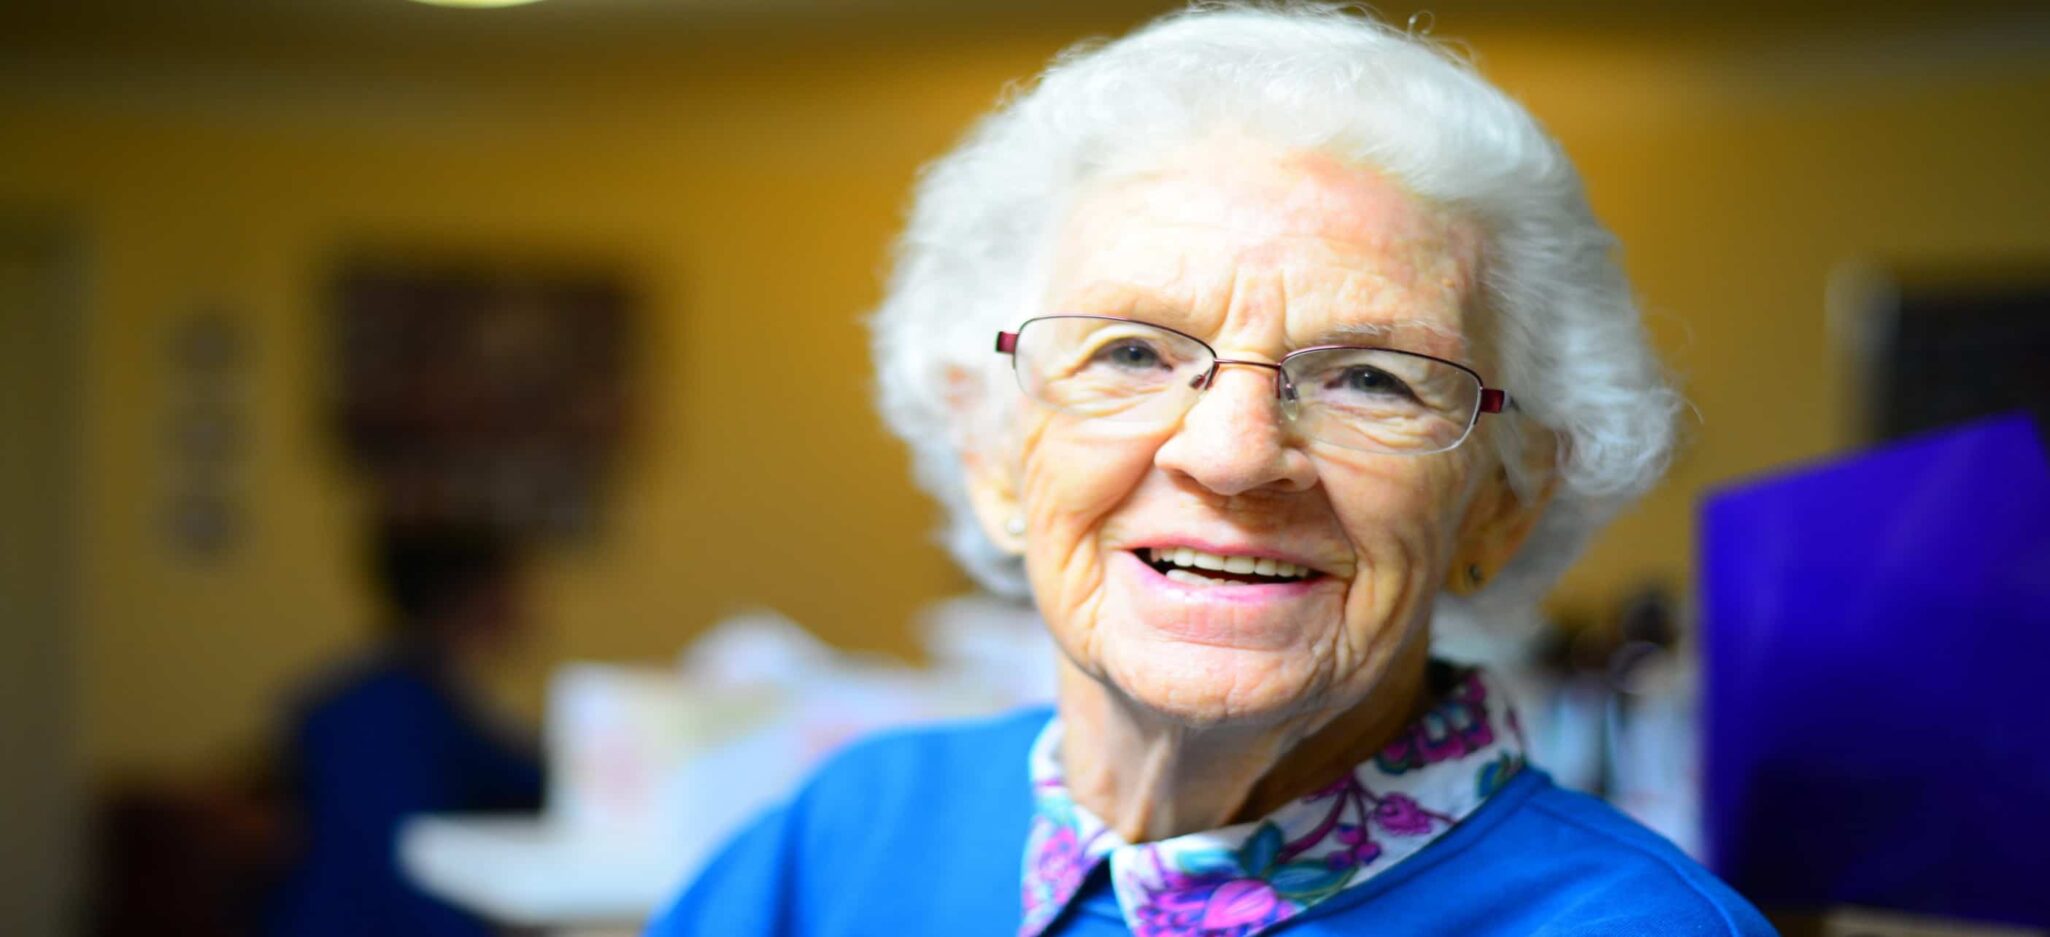 A smiling senior woman.